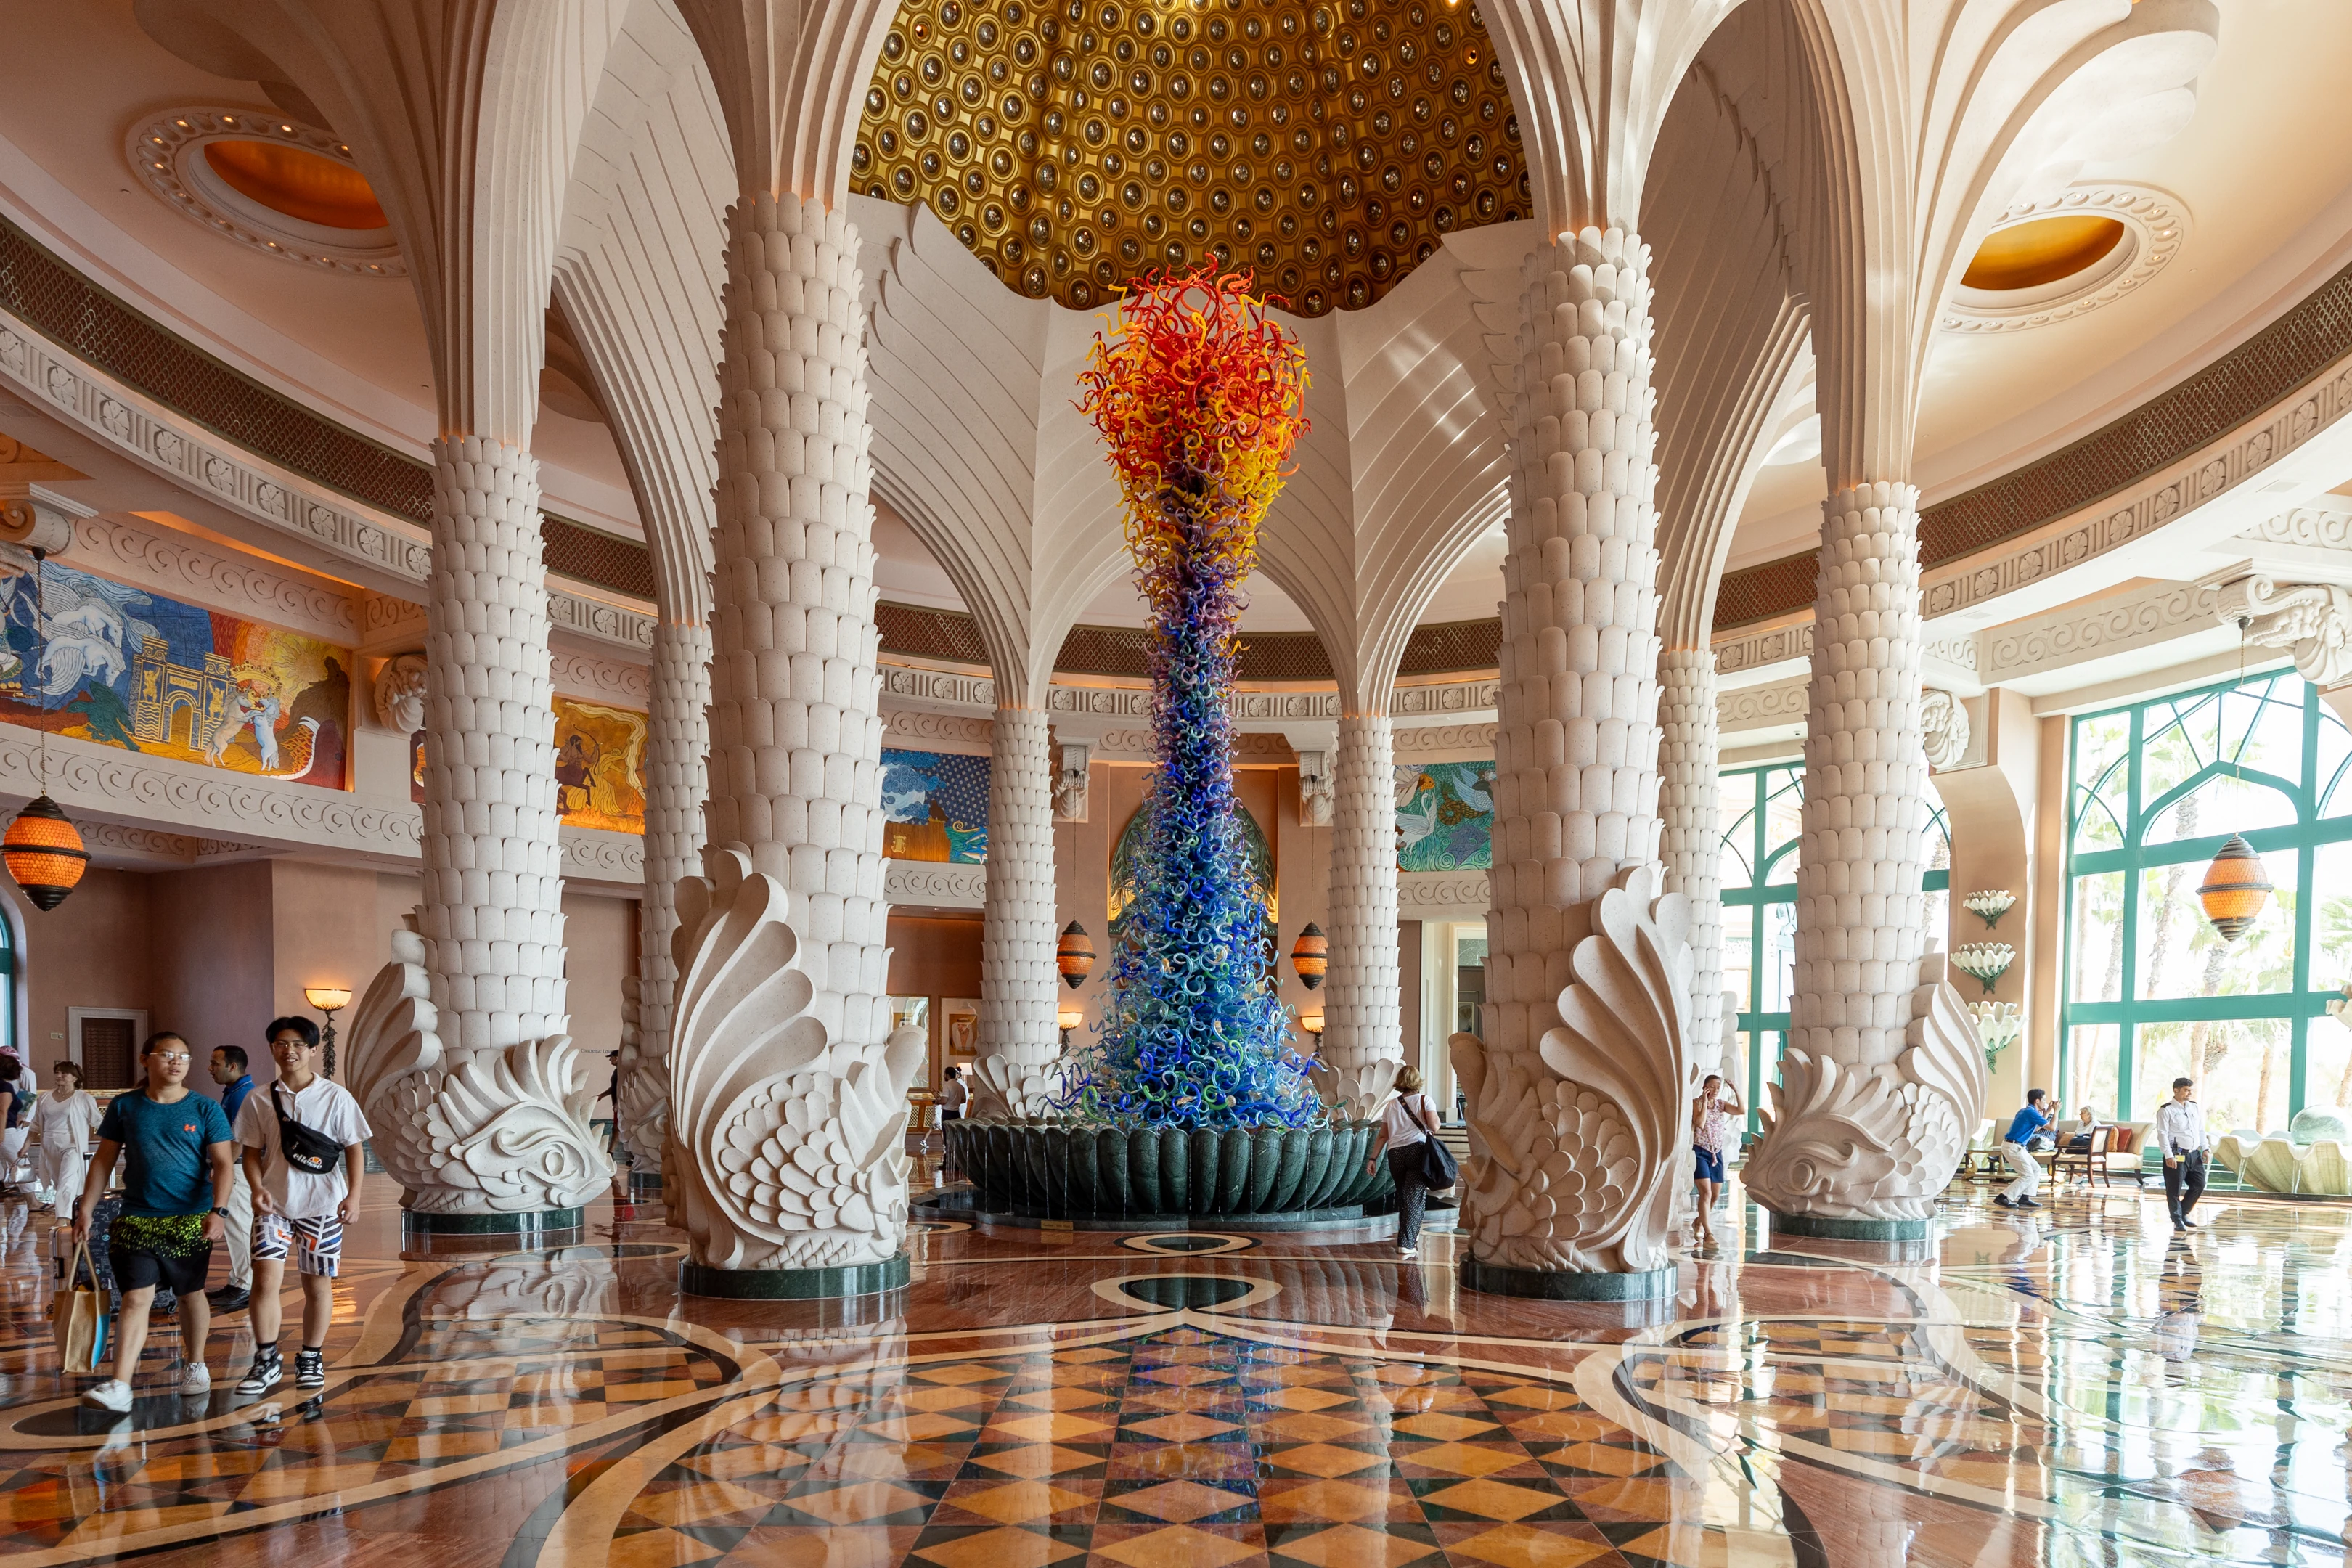 The lobby at Atlantis, The Palm, Dubai